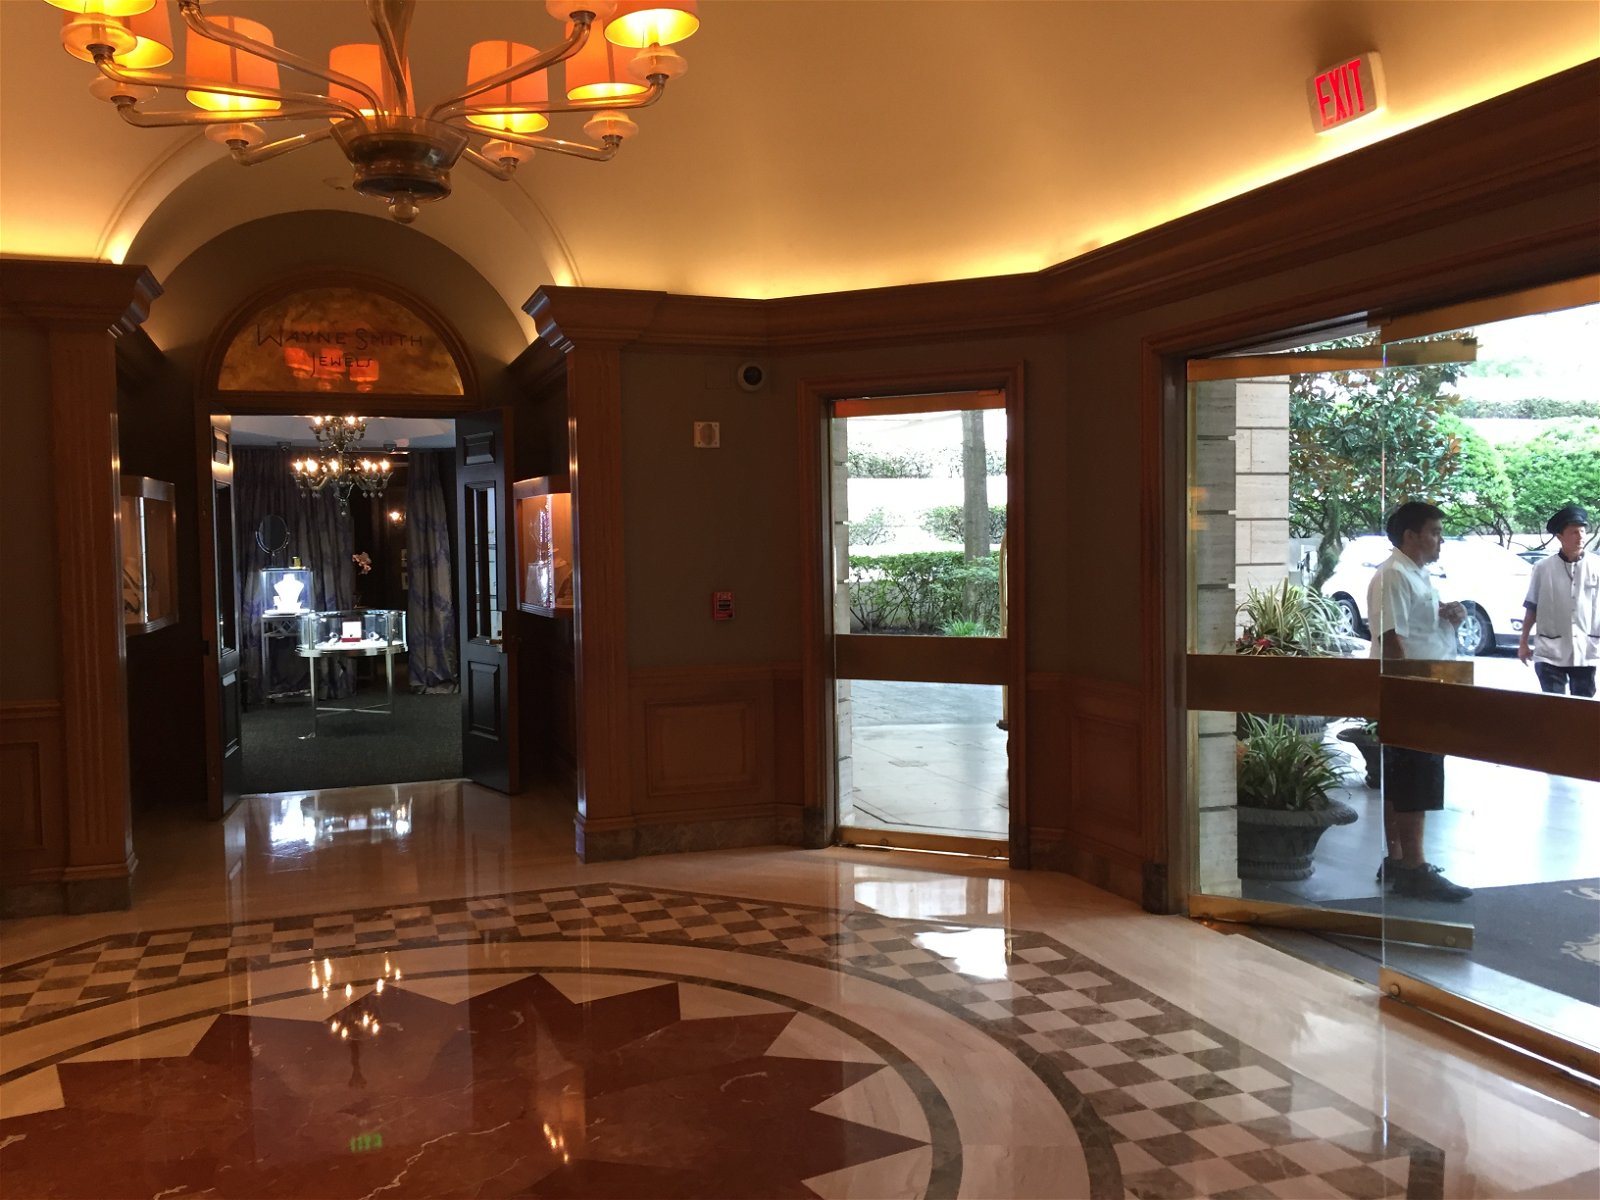 St. Regis Houston lobby